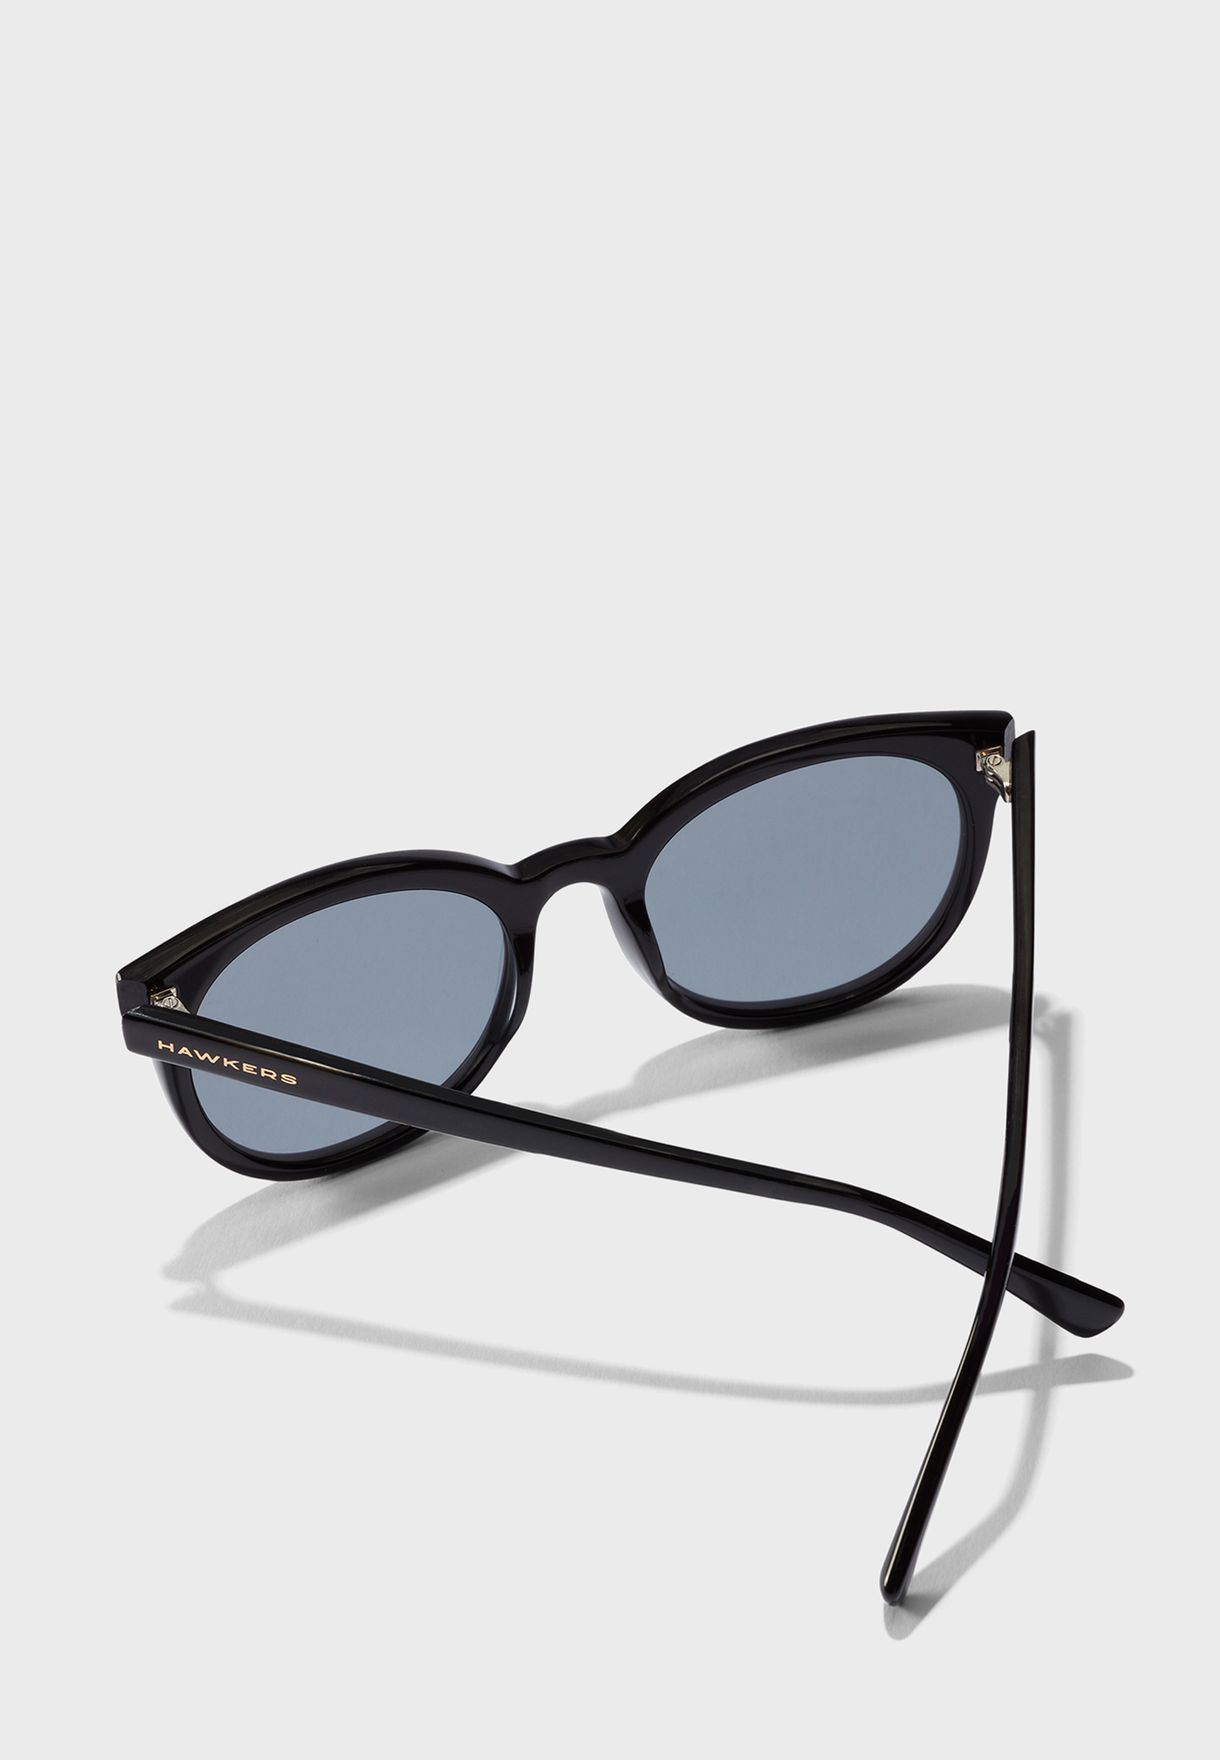 Resort Wayferer Sunglasses